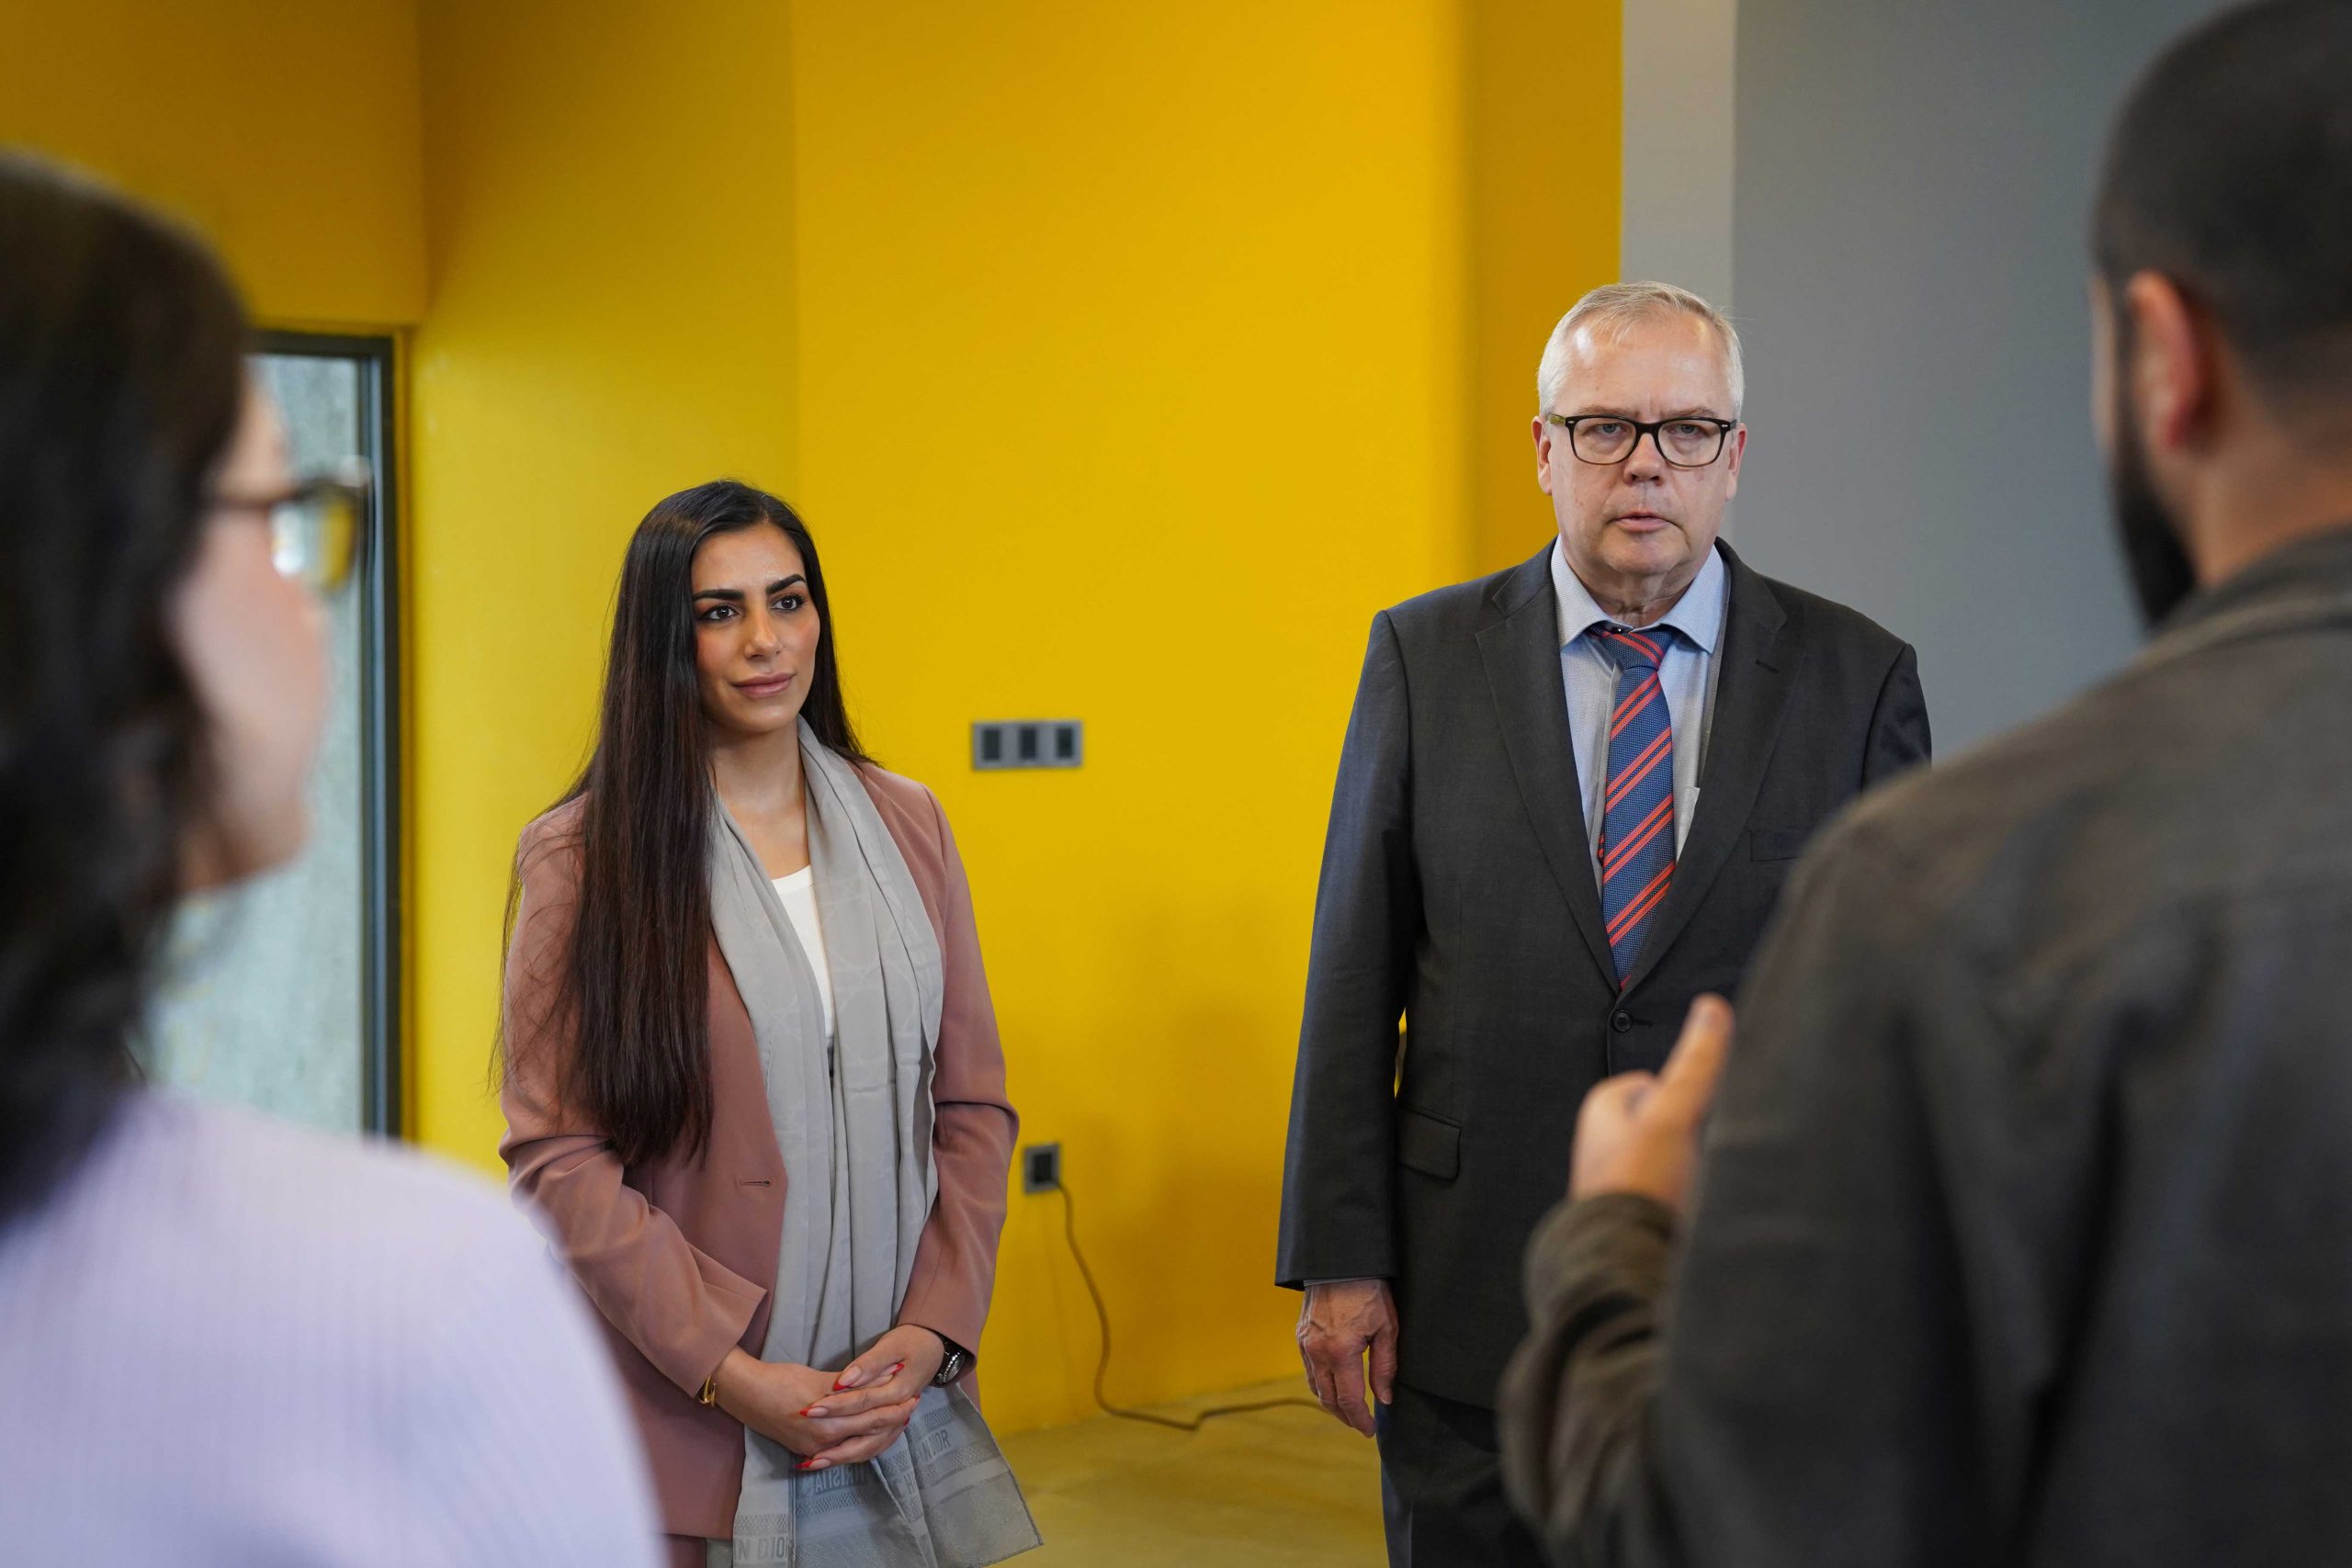 Matti Lassila, the Finnish ambassador to Iraq, visited Vim Foundation